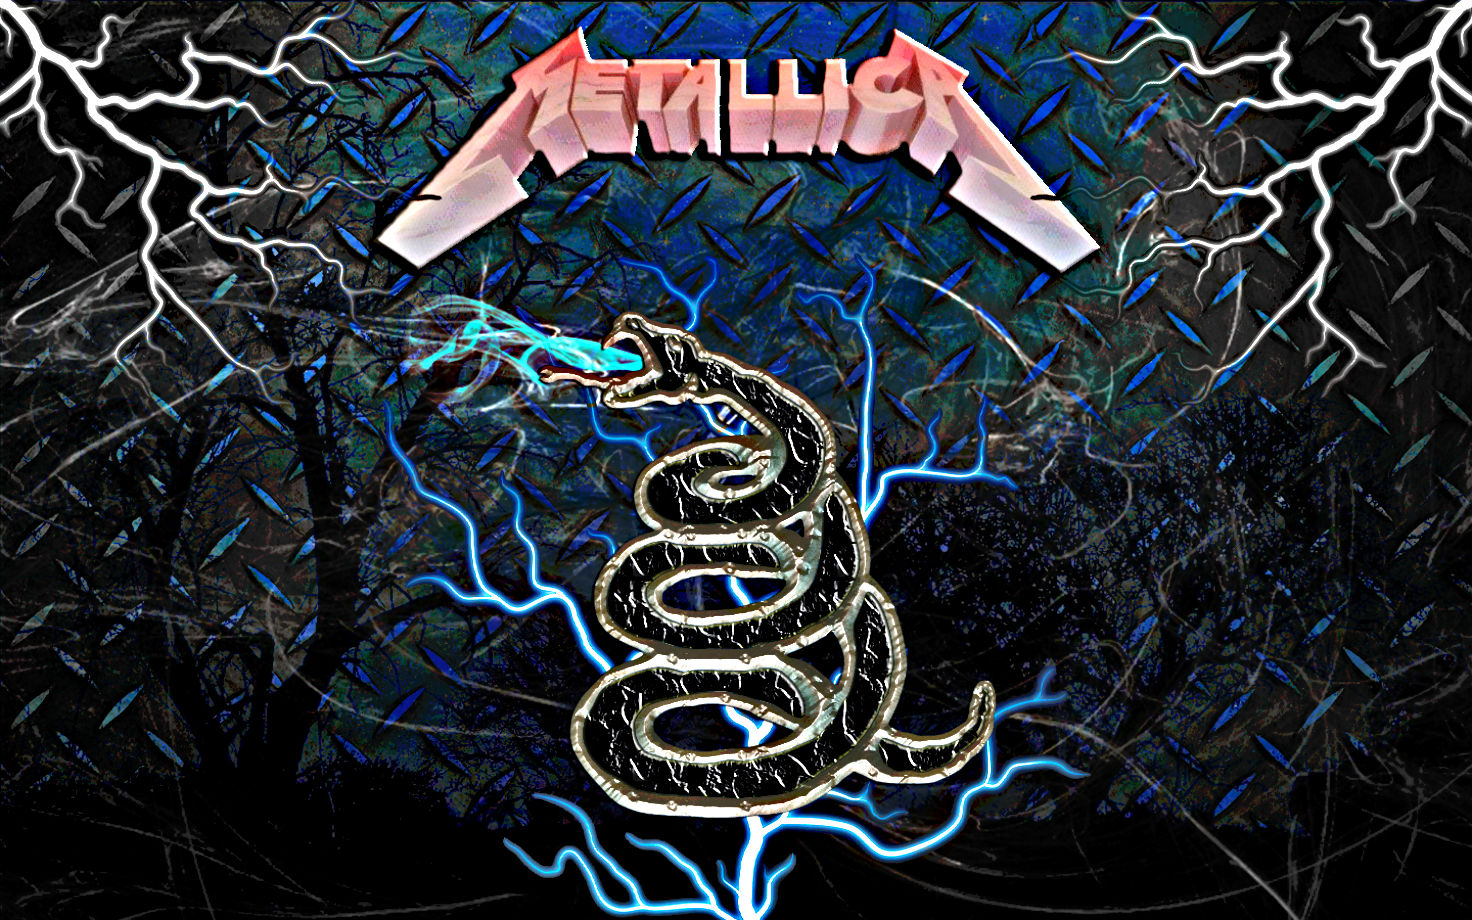 Metallica Thrash Metal Heavy Album Cover Art Poster Posters Wallpapers ...